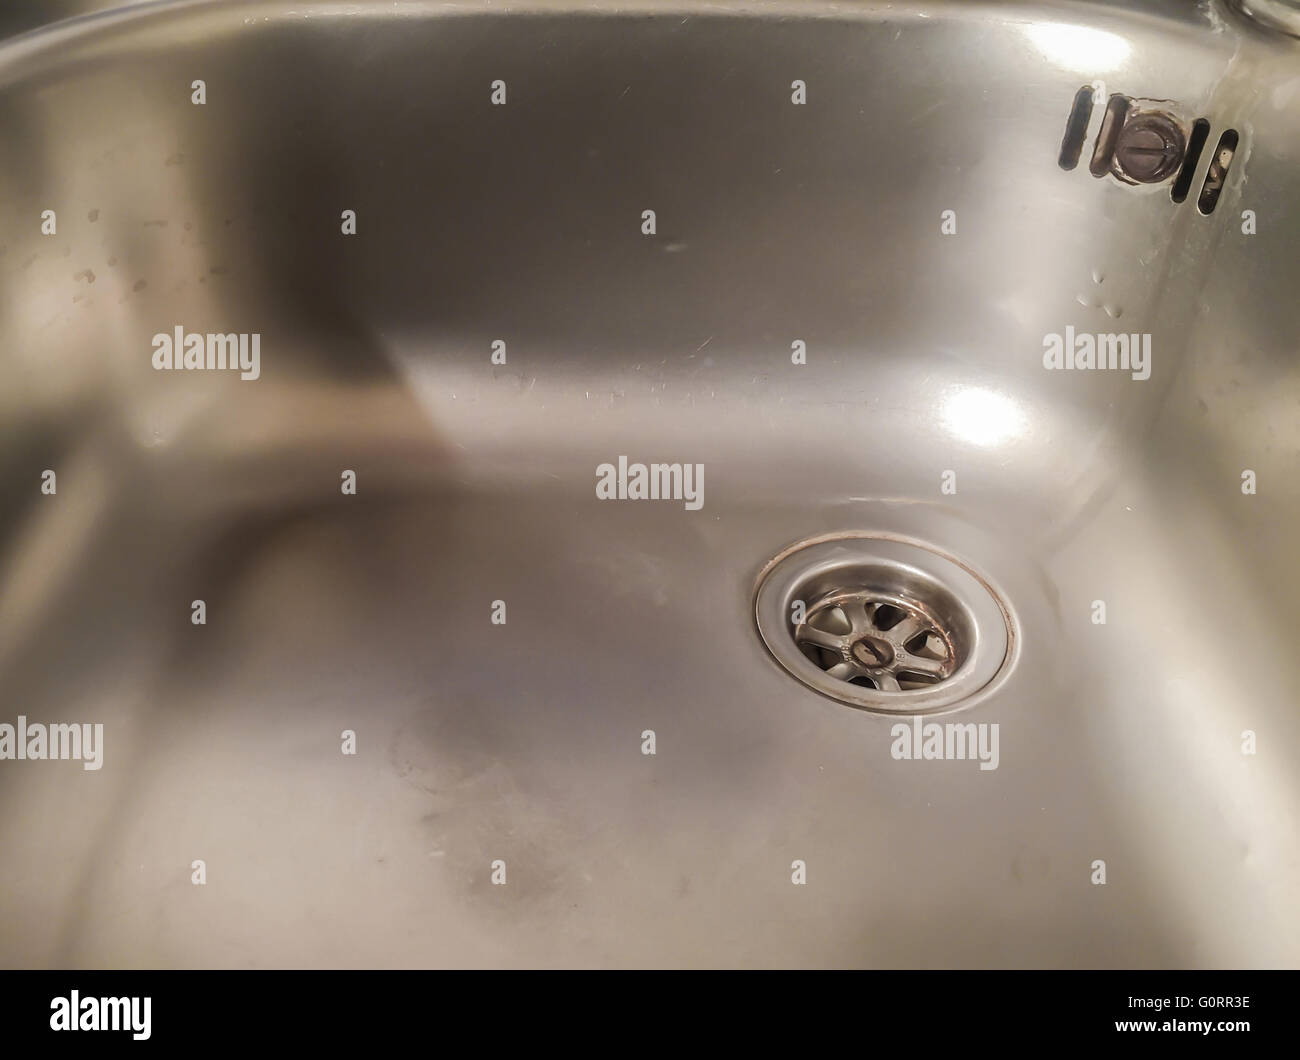 alluminium sink with rusty plug Stock Photo